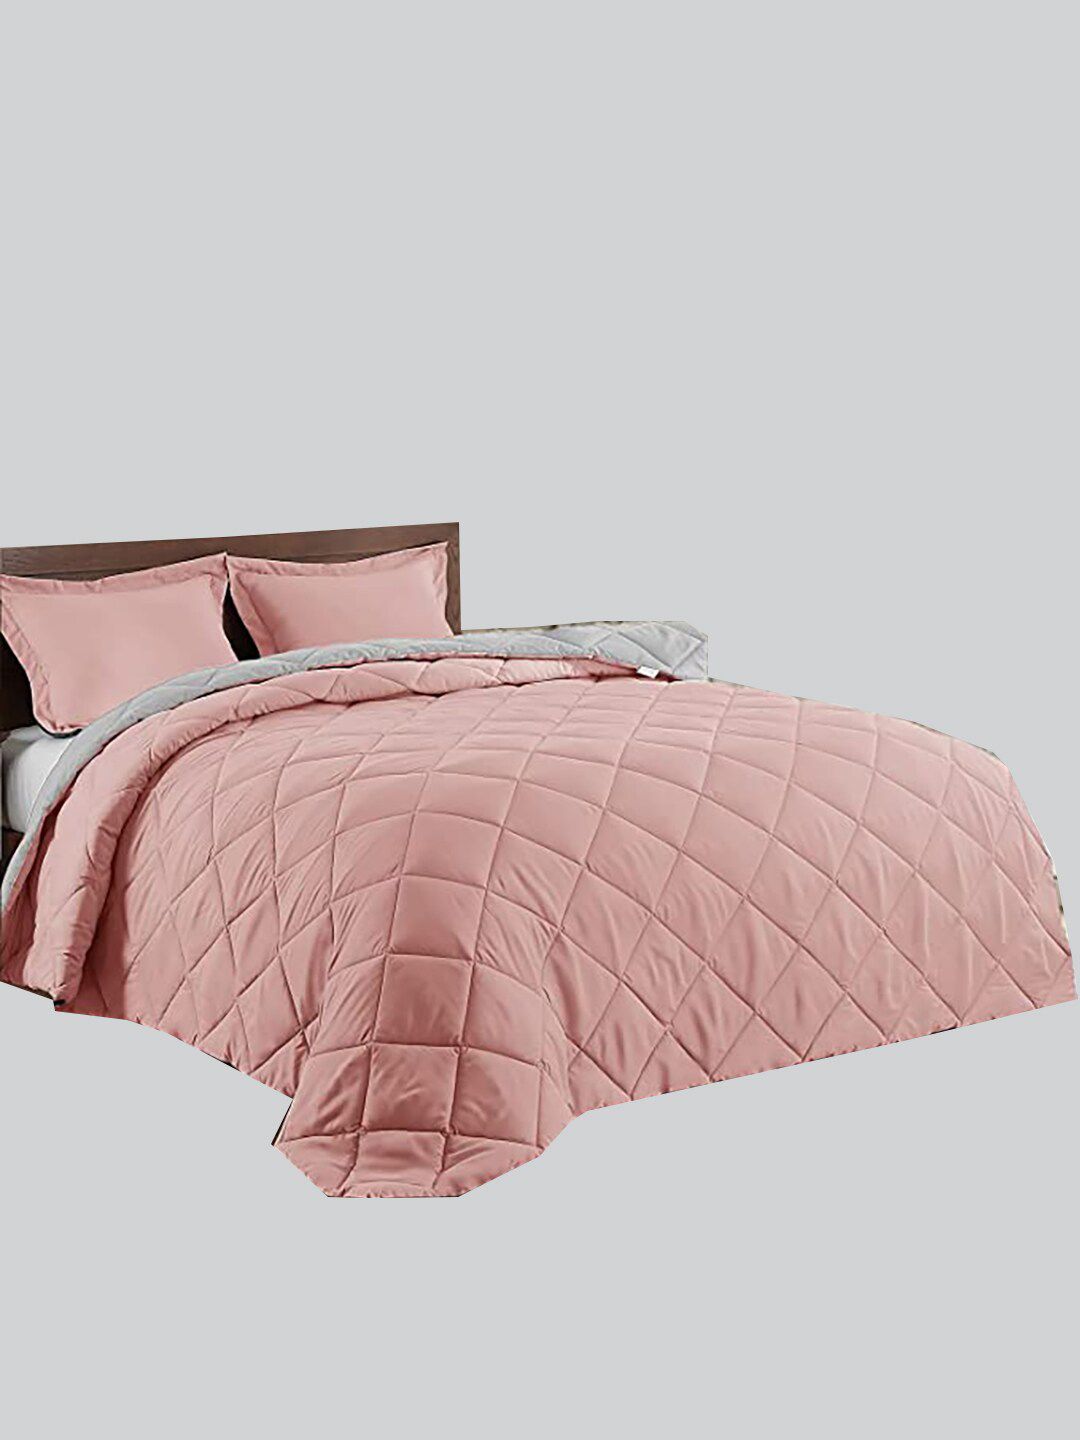 RAASO Peach-Coloured & Grey Microfiber AC Room Reversible Single Bed Blanket Price in India